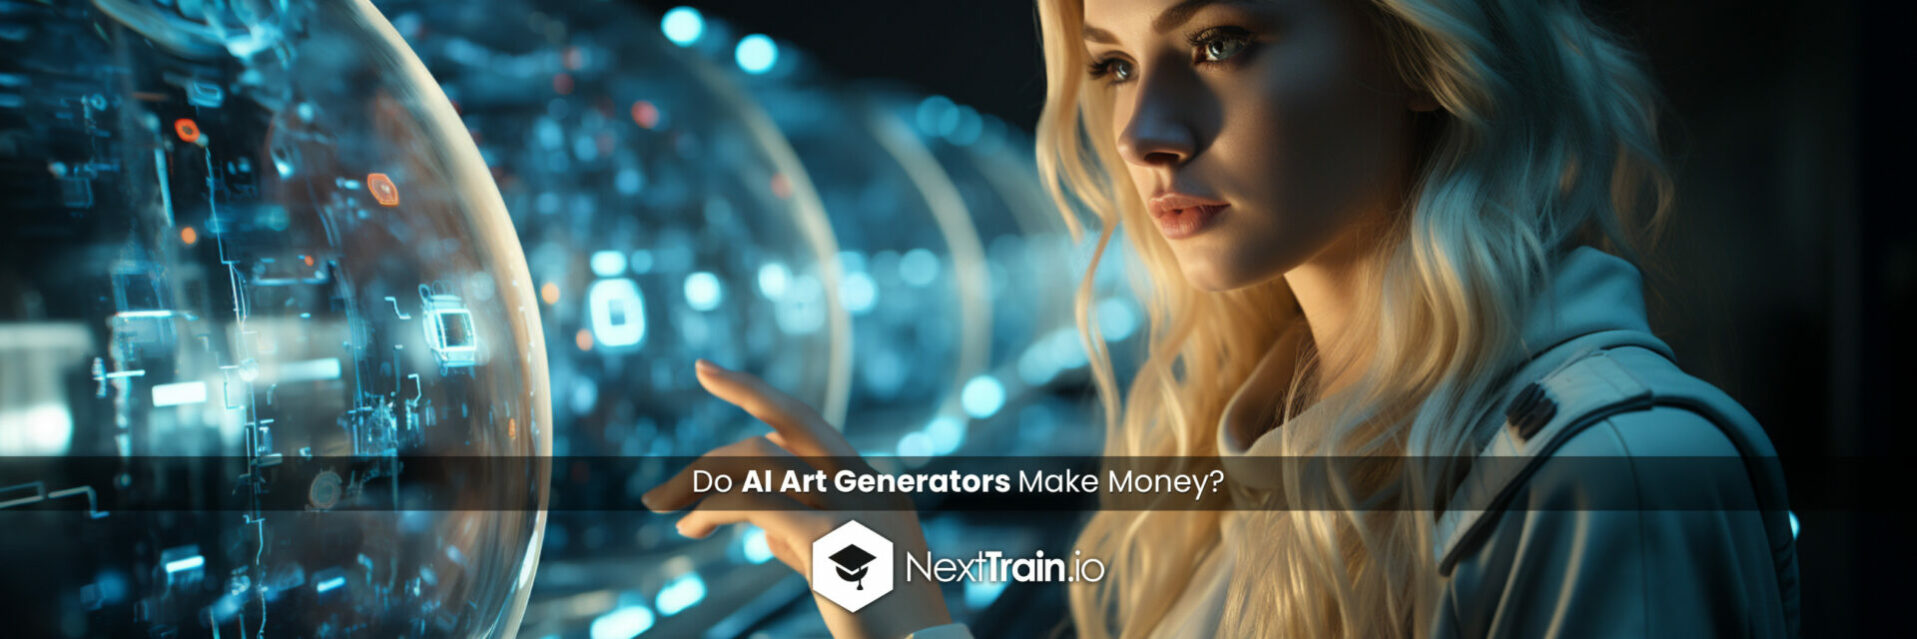 Do AI Art Generators Make Money?